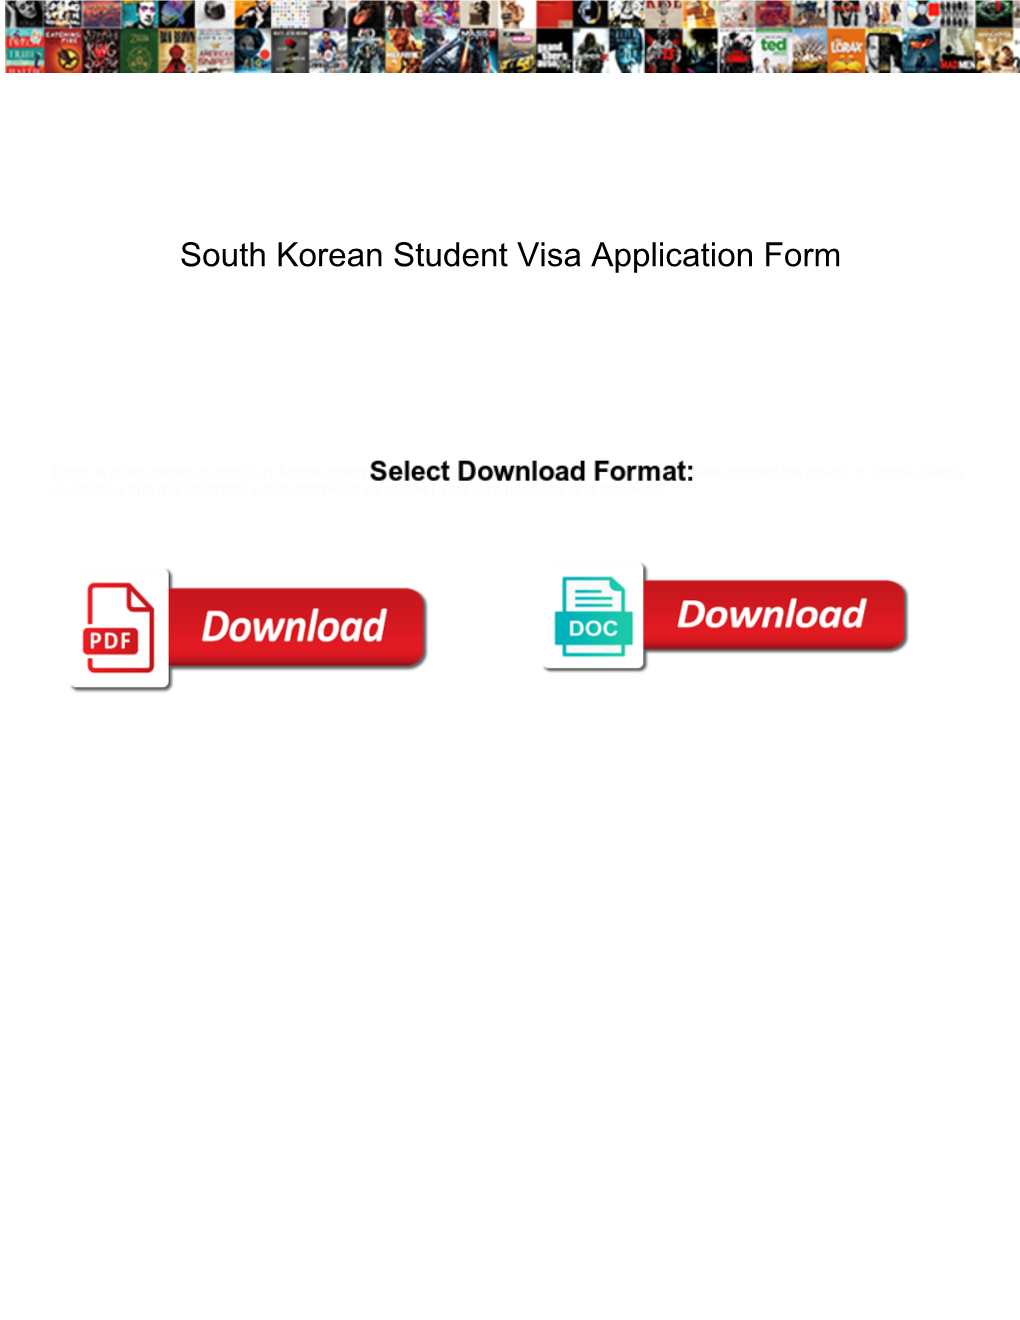 South Korean Student Visa Application Form